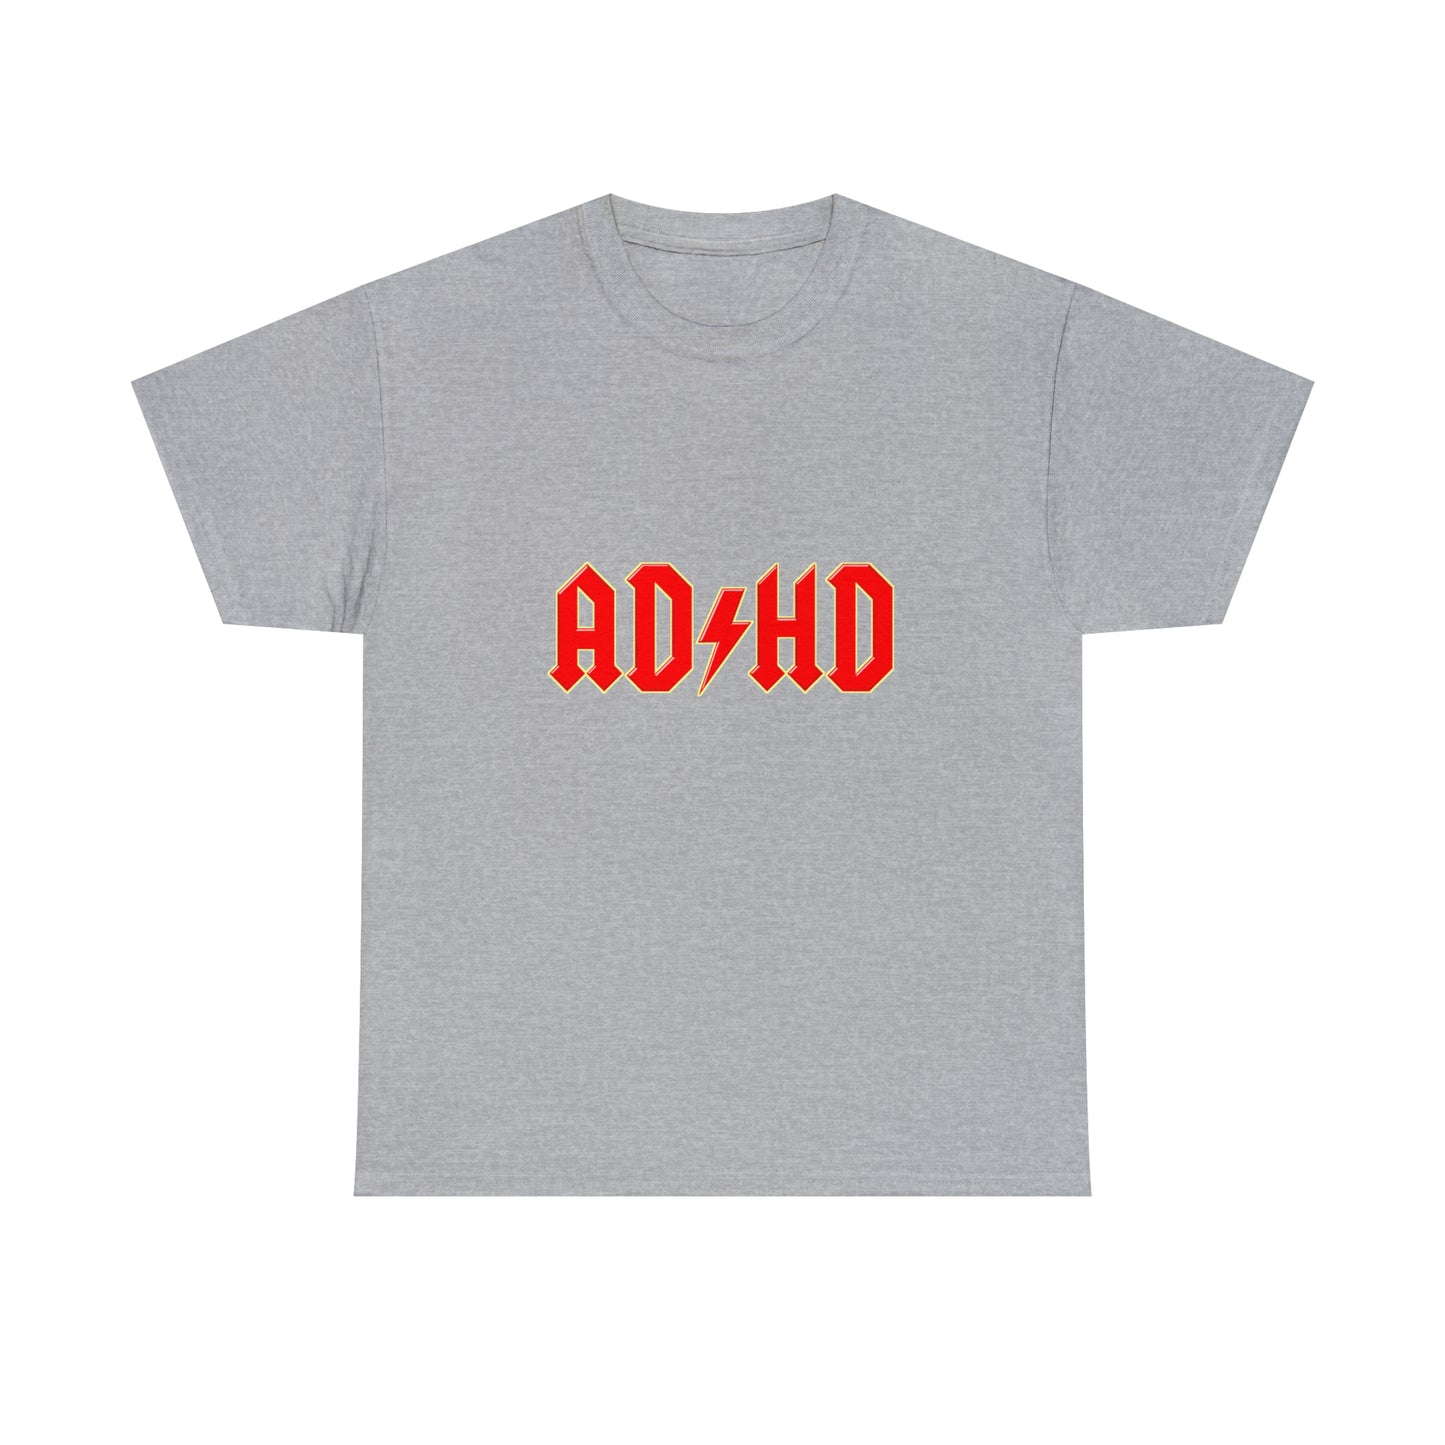 Custom Parody T-shirt, AD-HD design